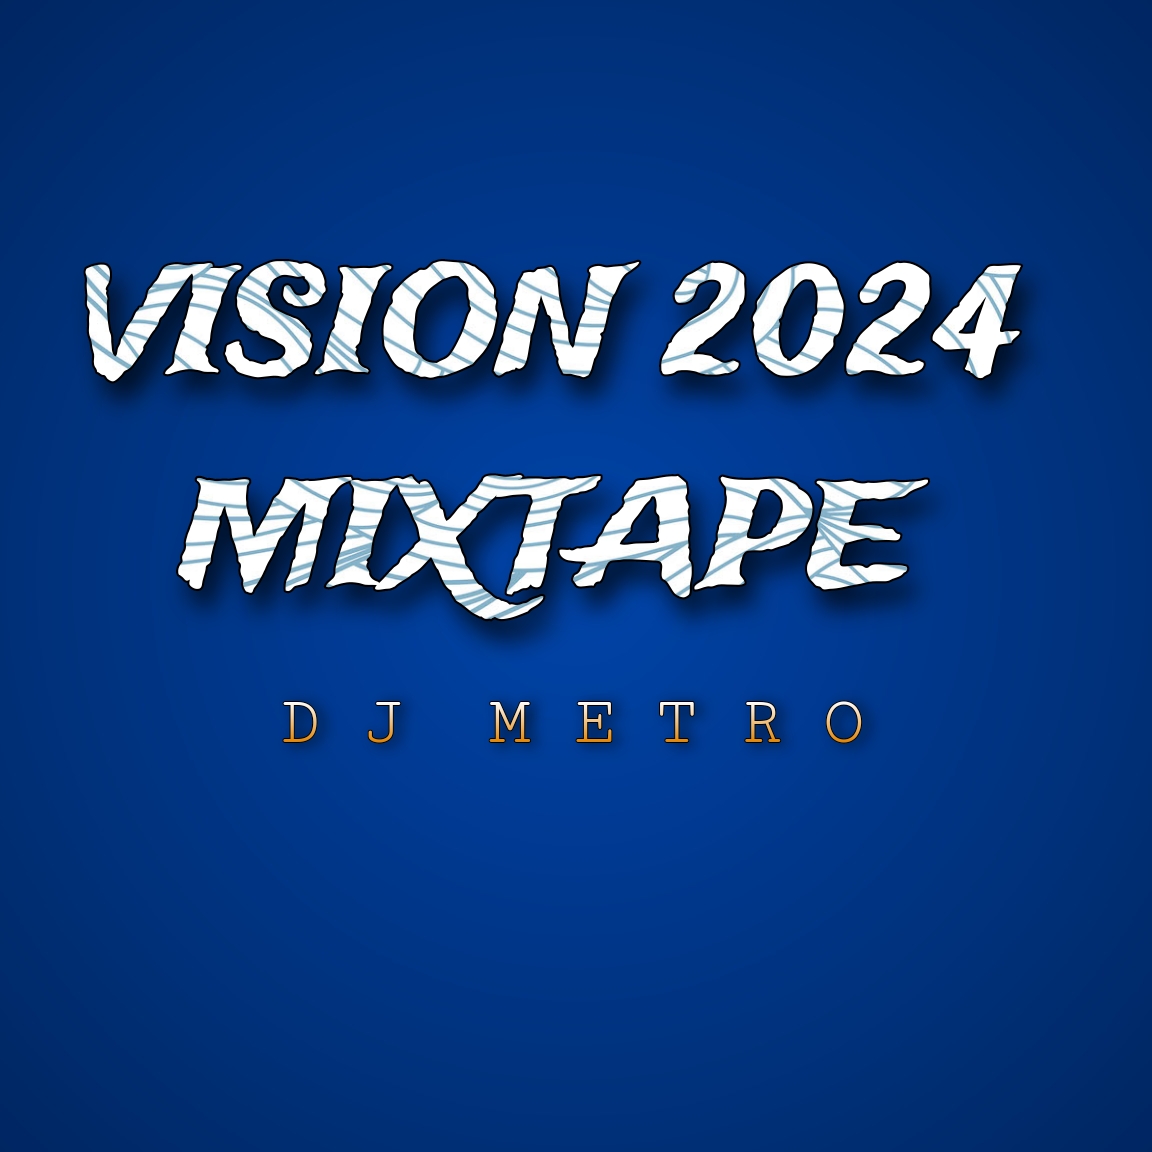 DJ Metro Vision 2024 Mixtape